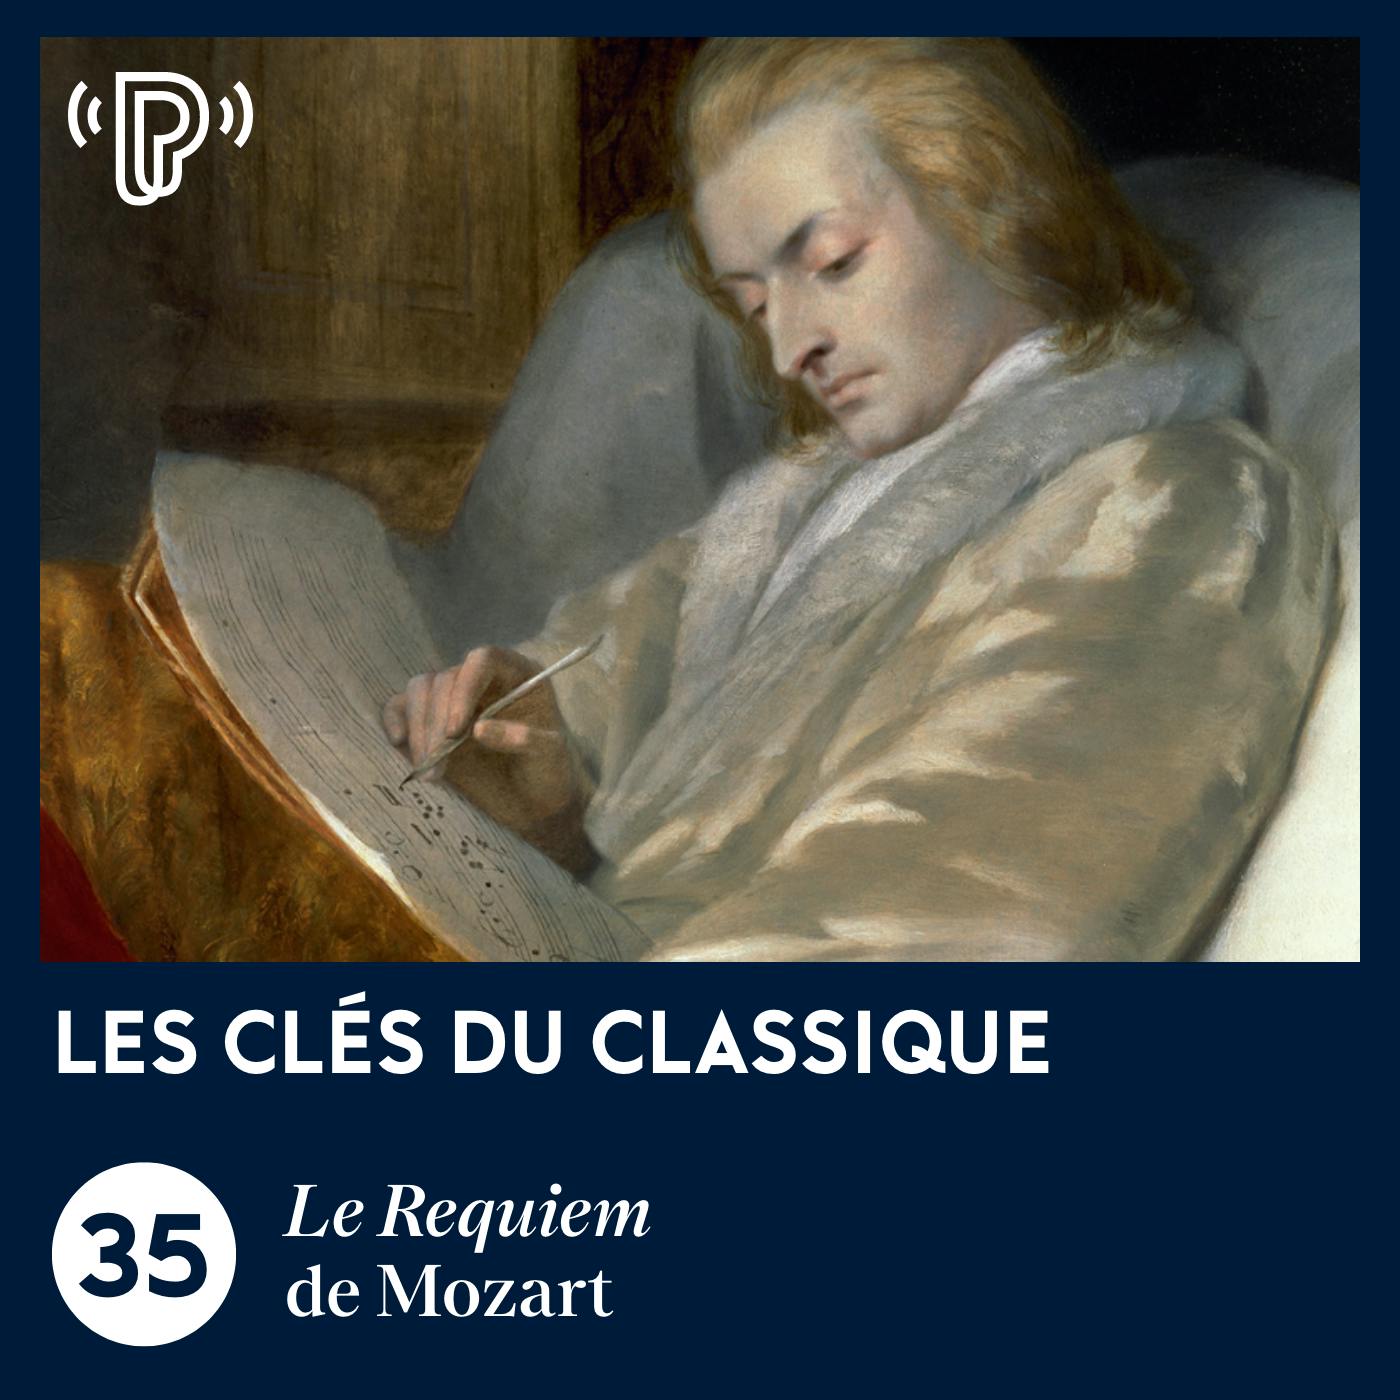 Le Requiem de Mozart | Les Clés du classique #35